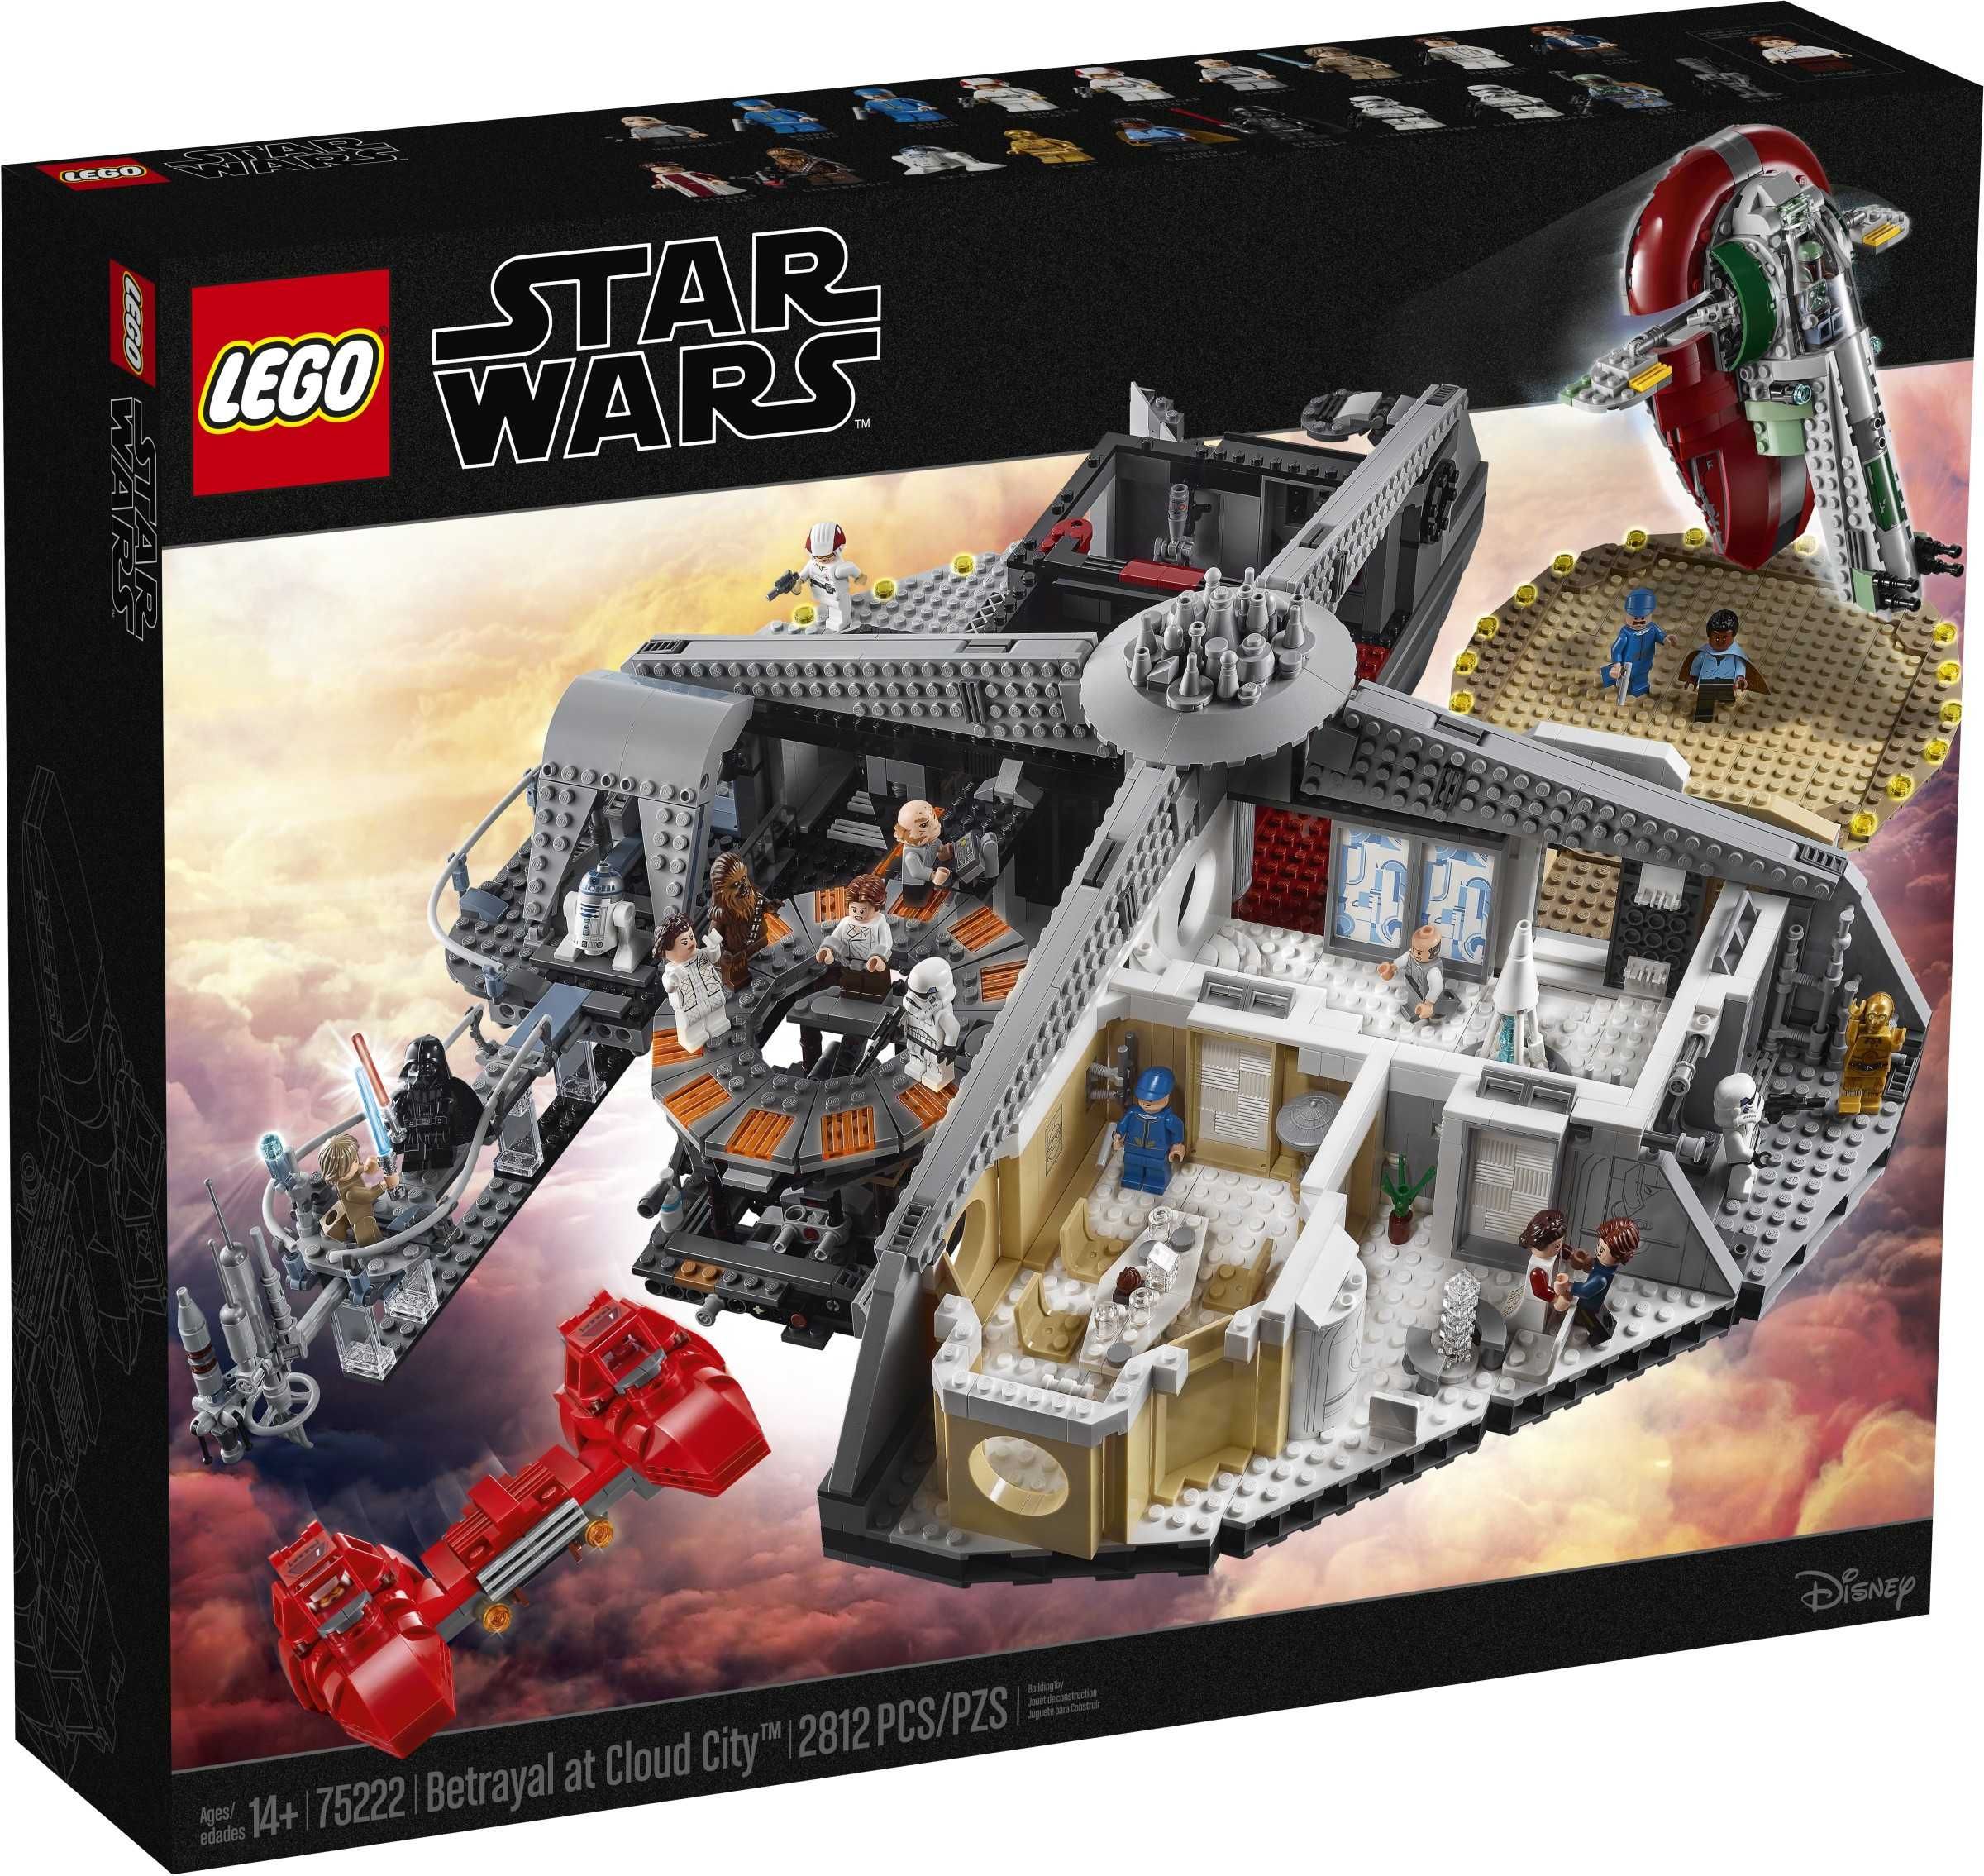 LEGO Star Wars 75222 - Betrayal at Cloud City -set de colectie